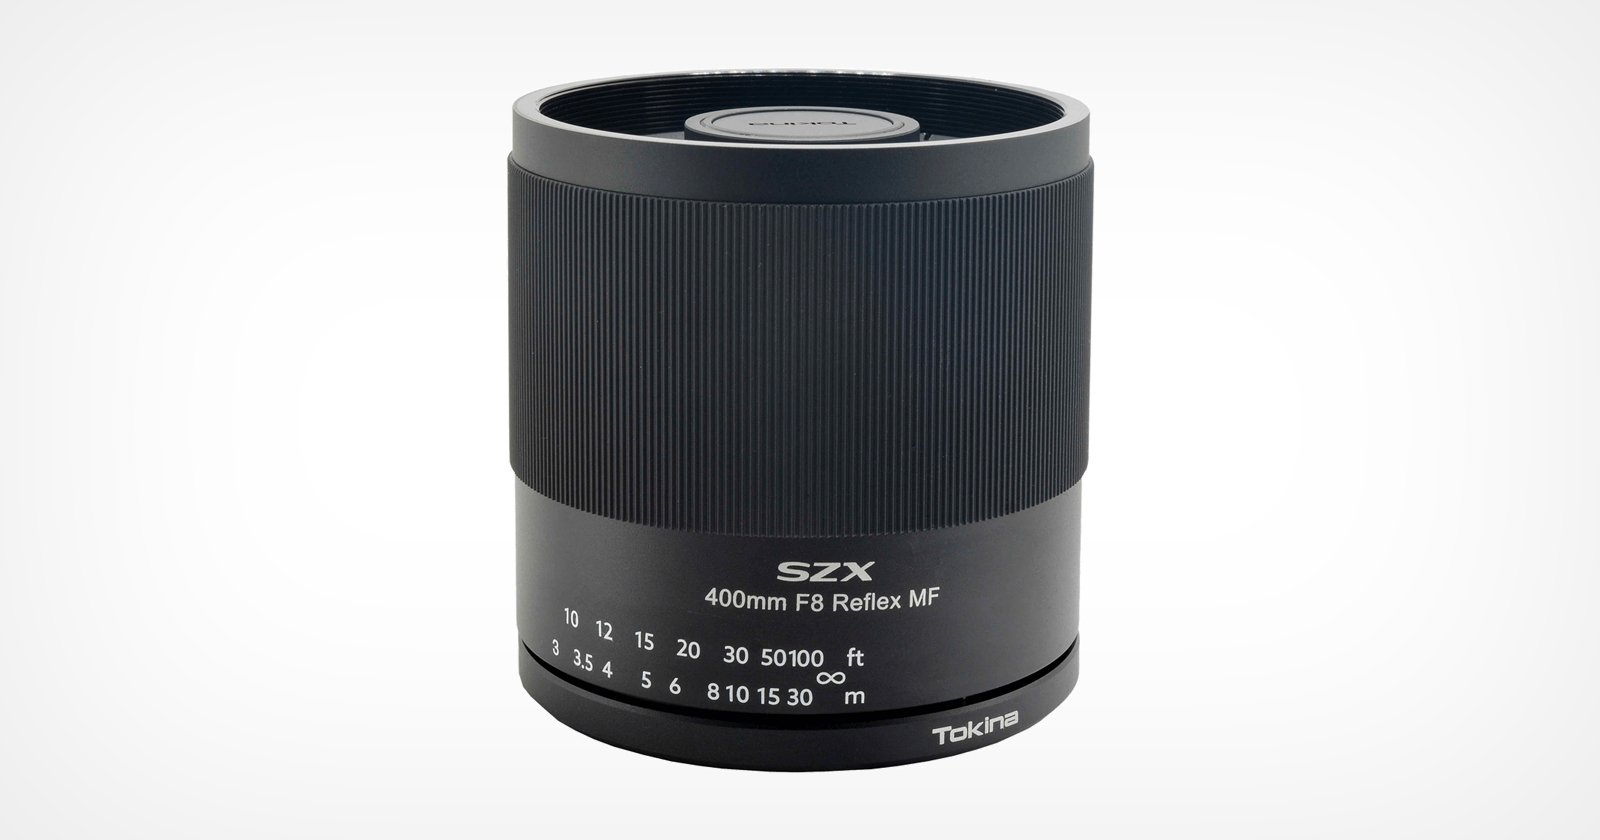 Tokina SZX 400mm f/8 Reflex Review: A Challenging But Fun $250